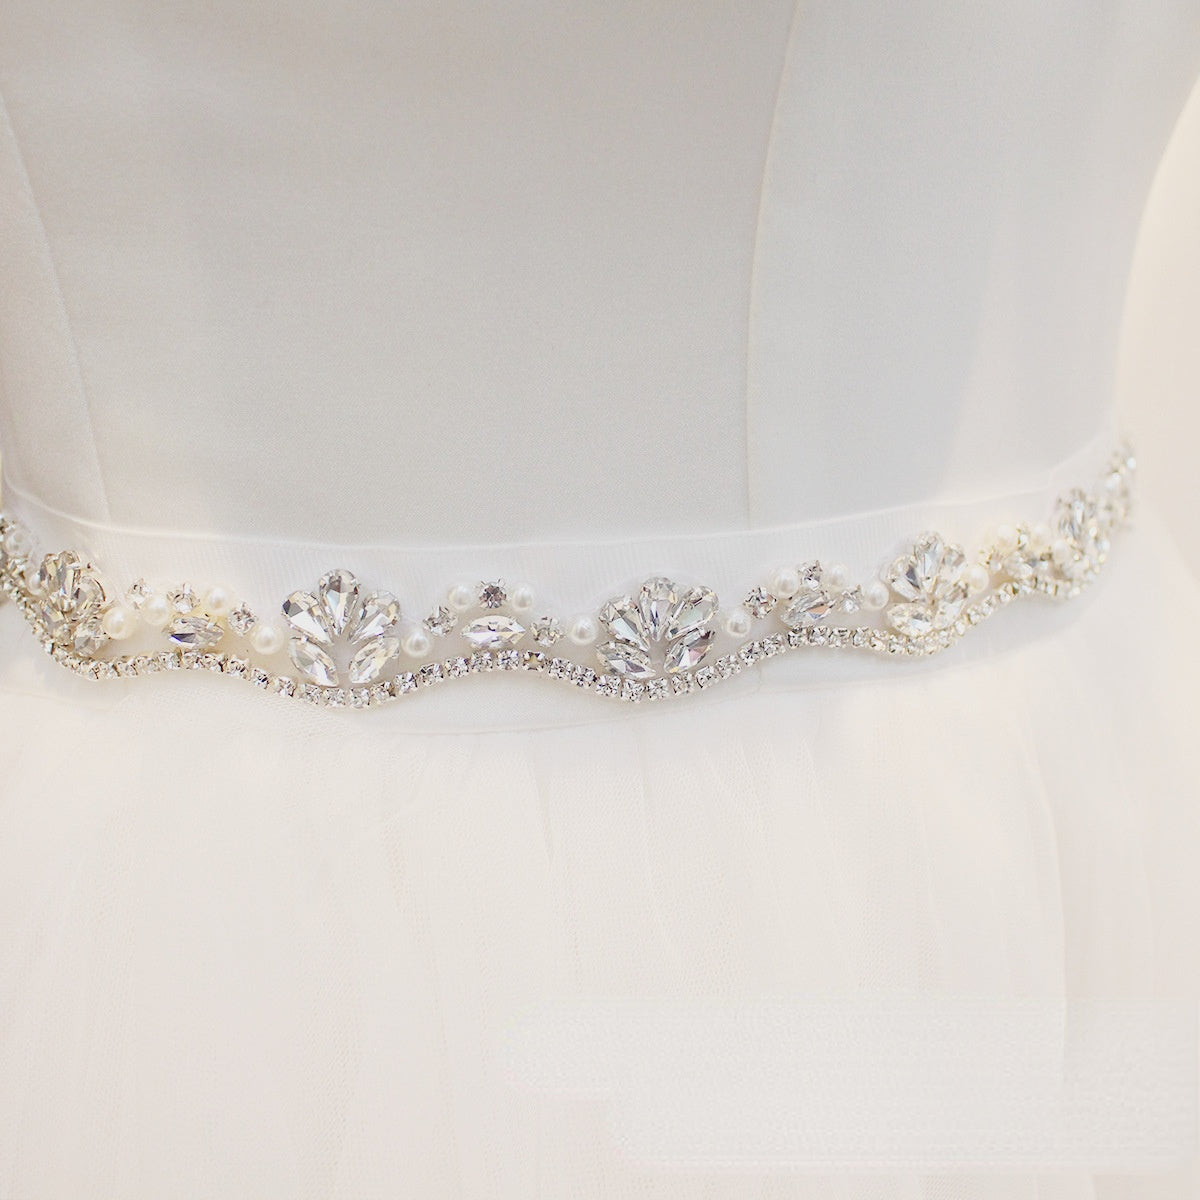 Wavy style figure flattering belt bridal wedding accessories